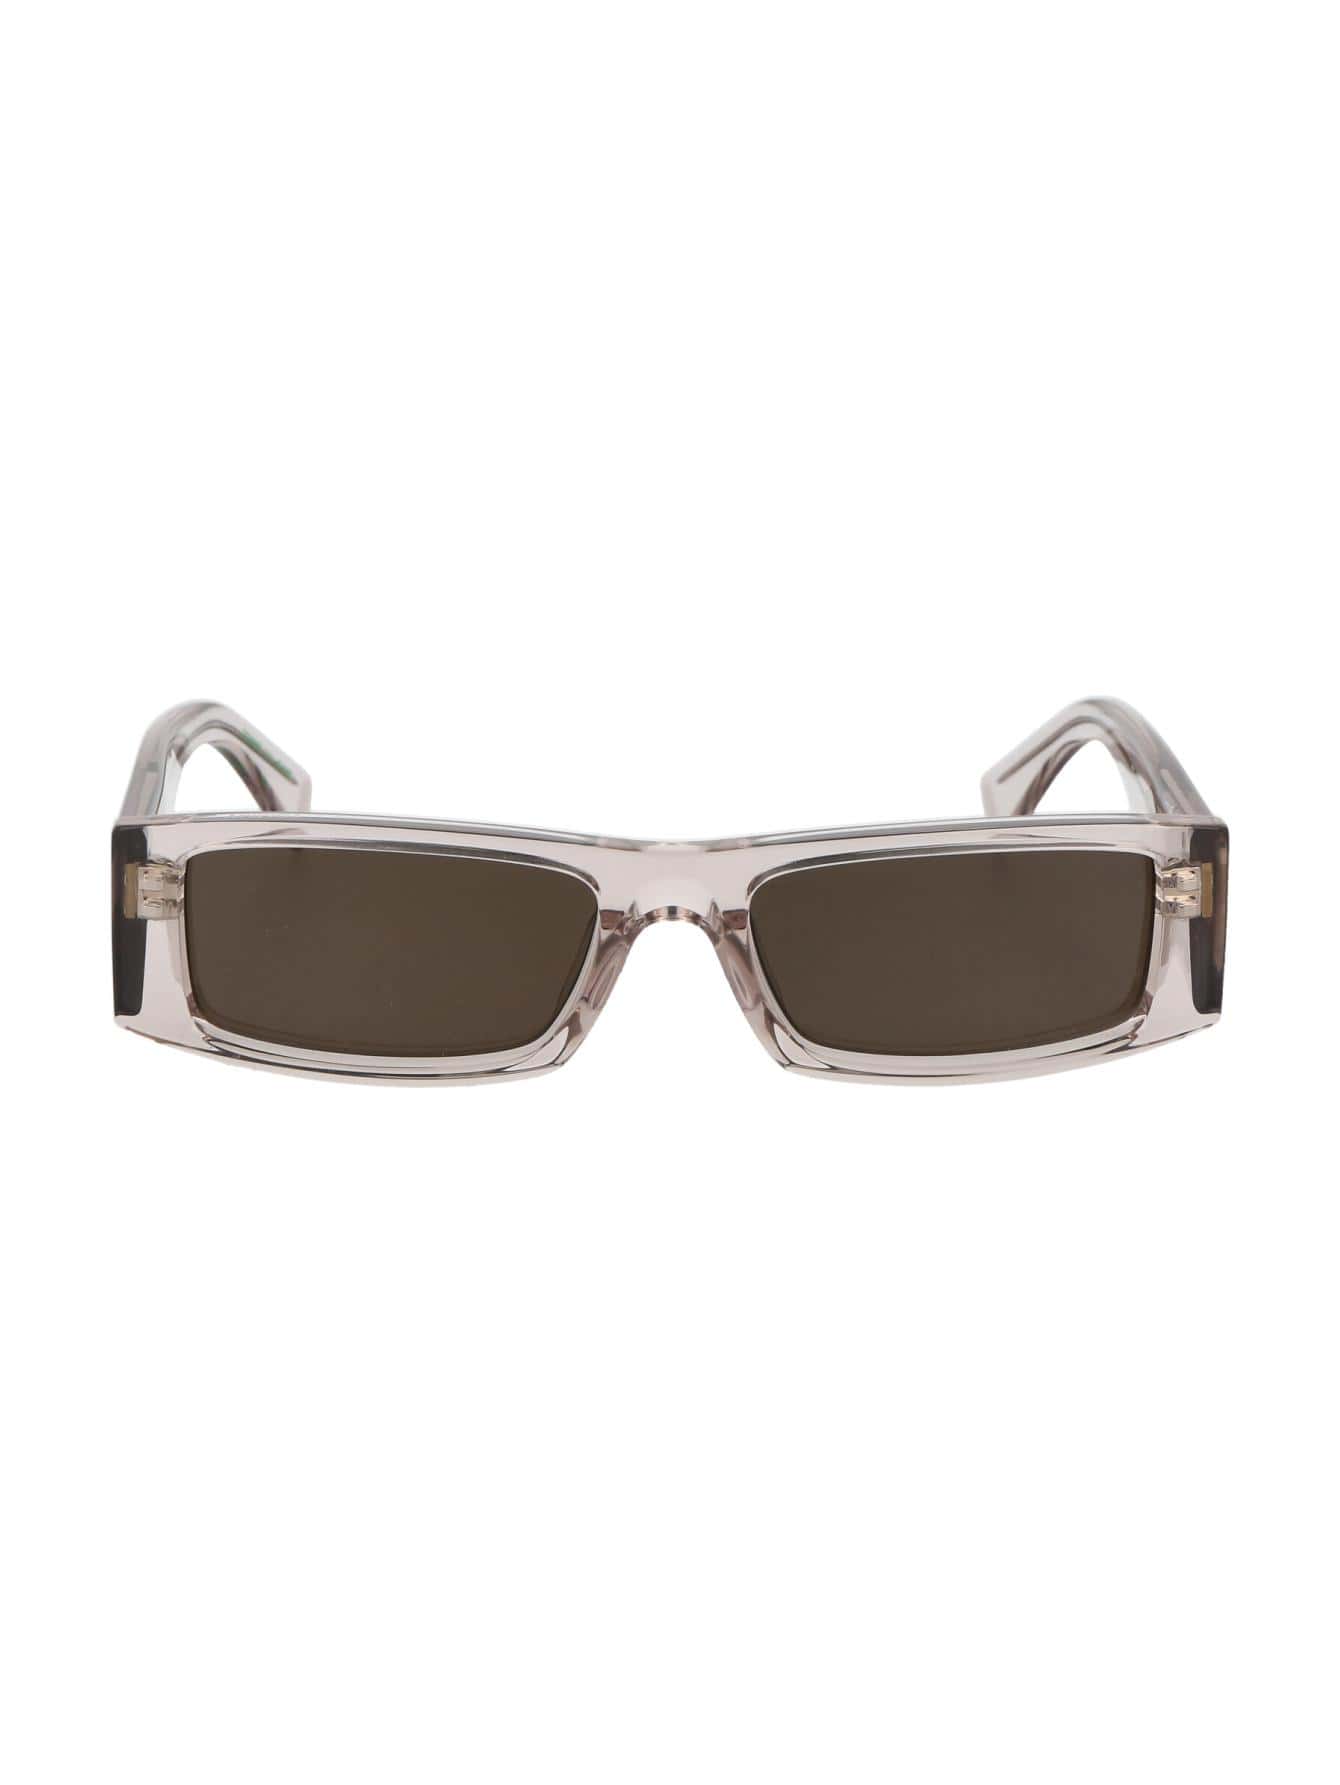 Мужские солнцезащитные очки Tommy Hilfiger DECOR TJ0092S10A70, многоцветный солнцезащитные очки tommy hilfiger серый синий